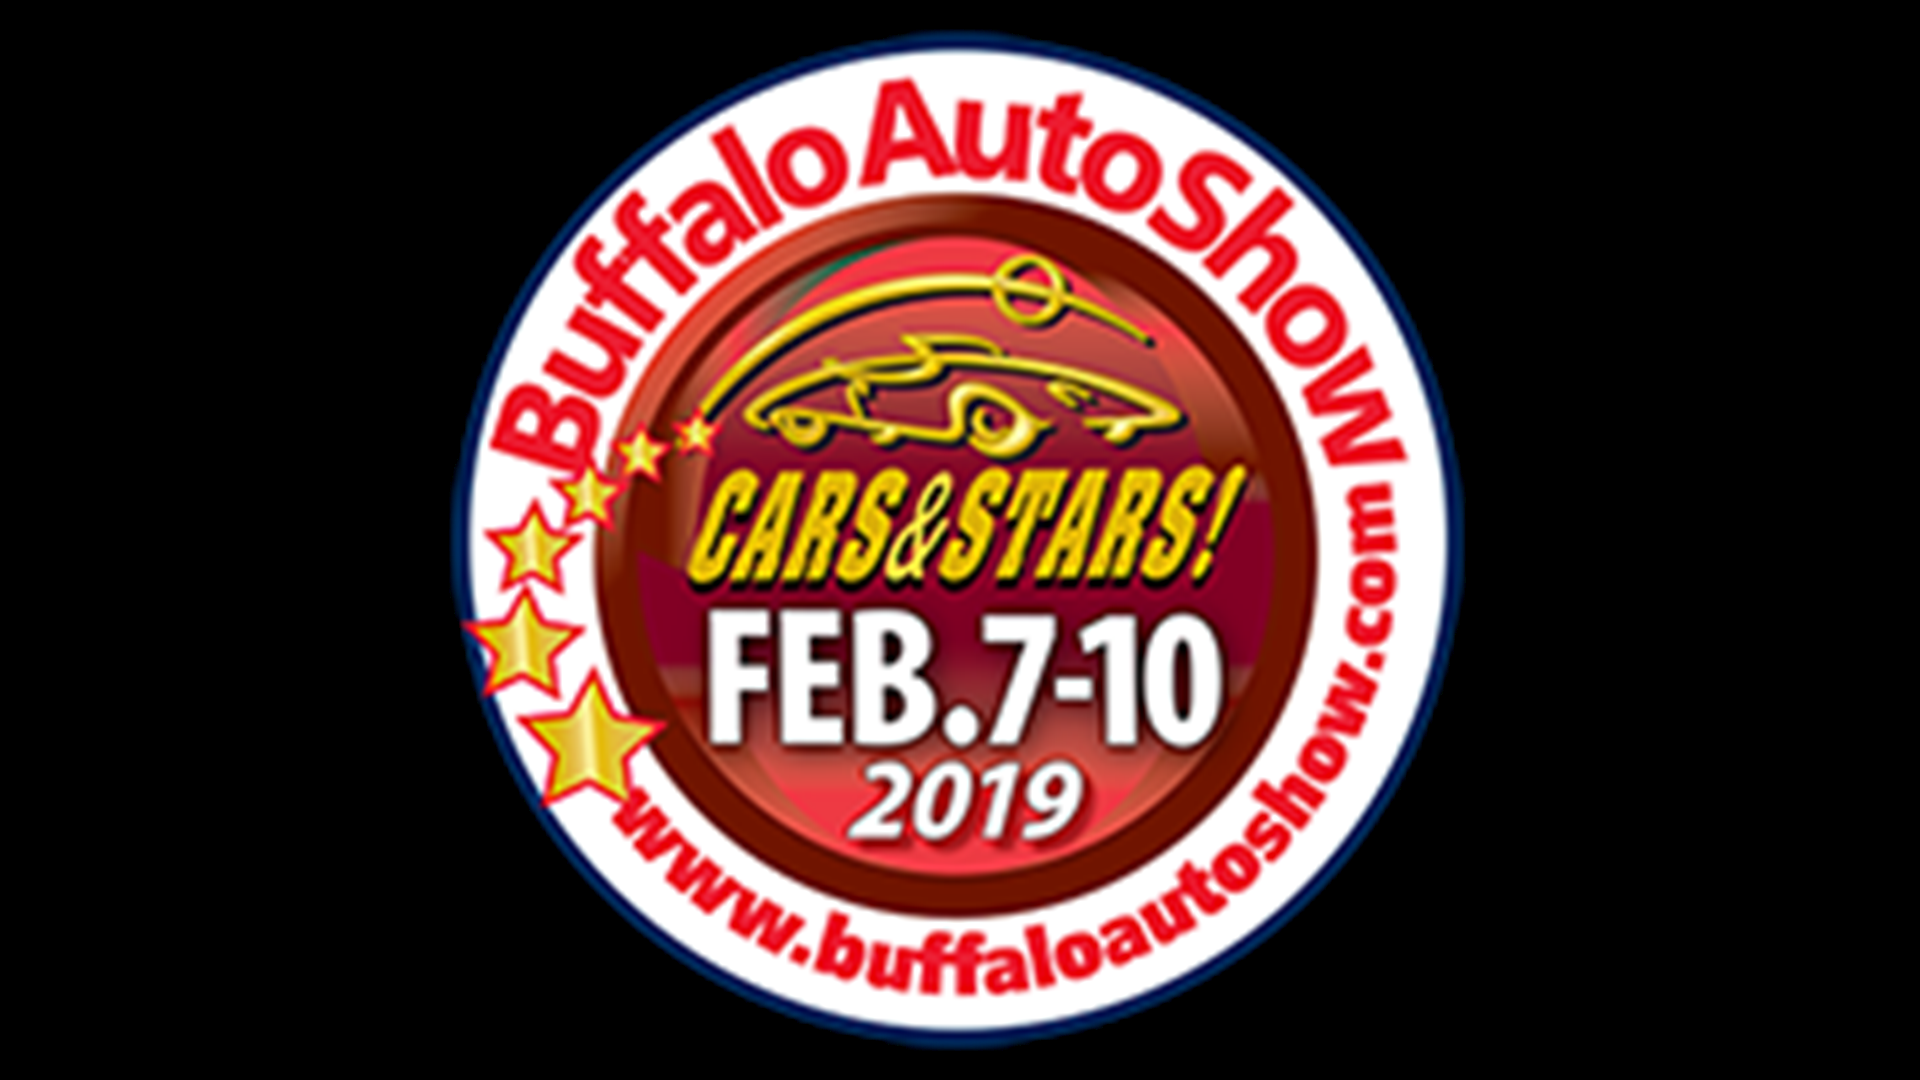 Buffalo Auto Show